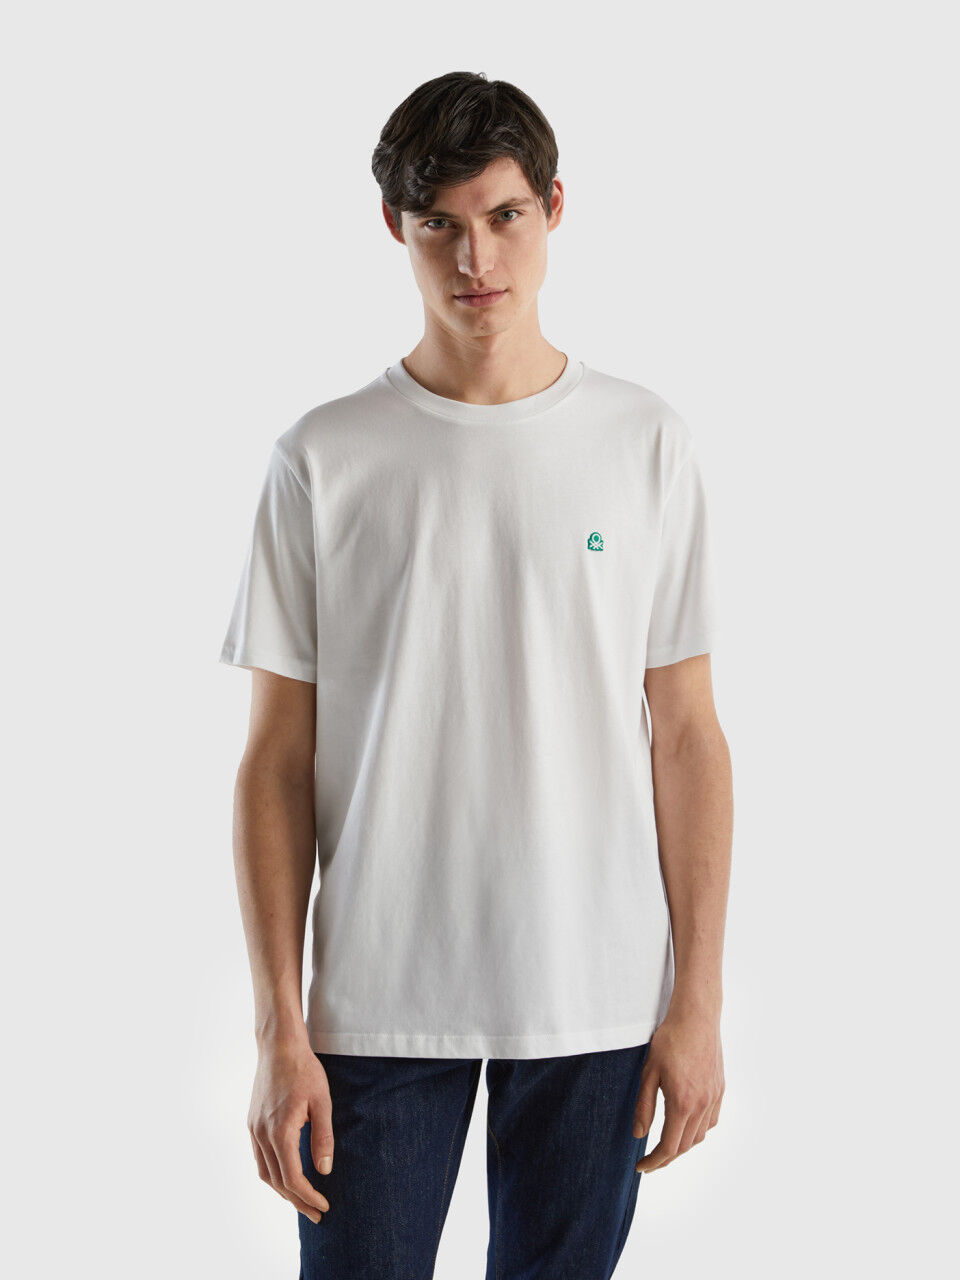 100% organic cotton basic t-shirt